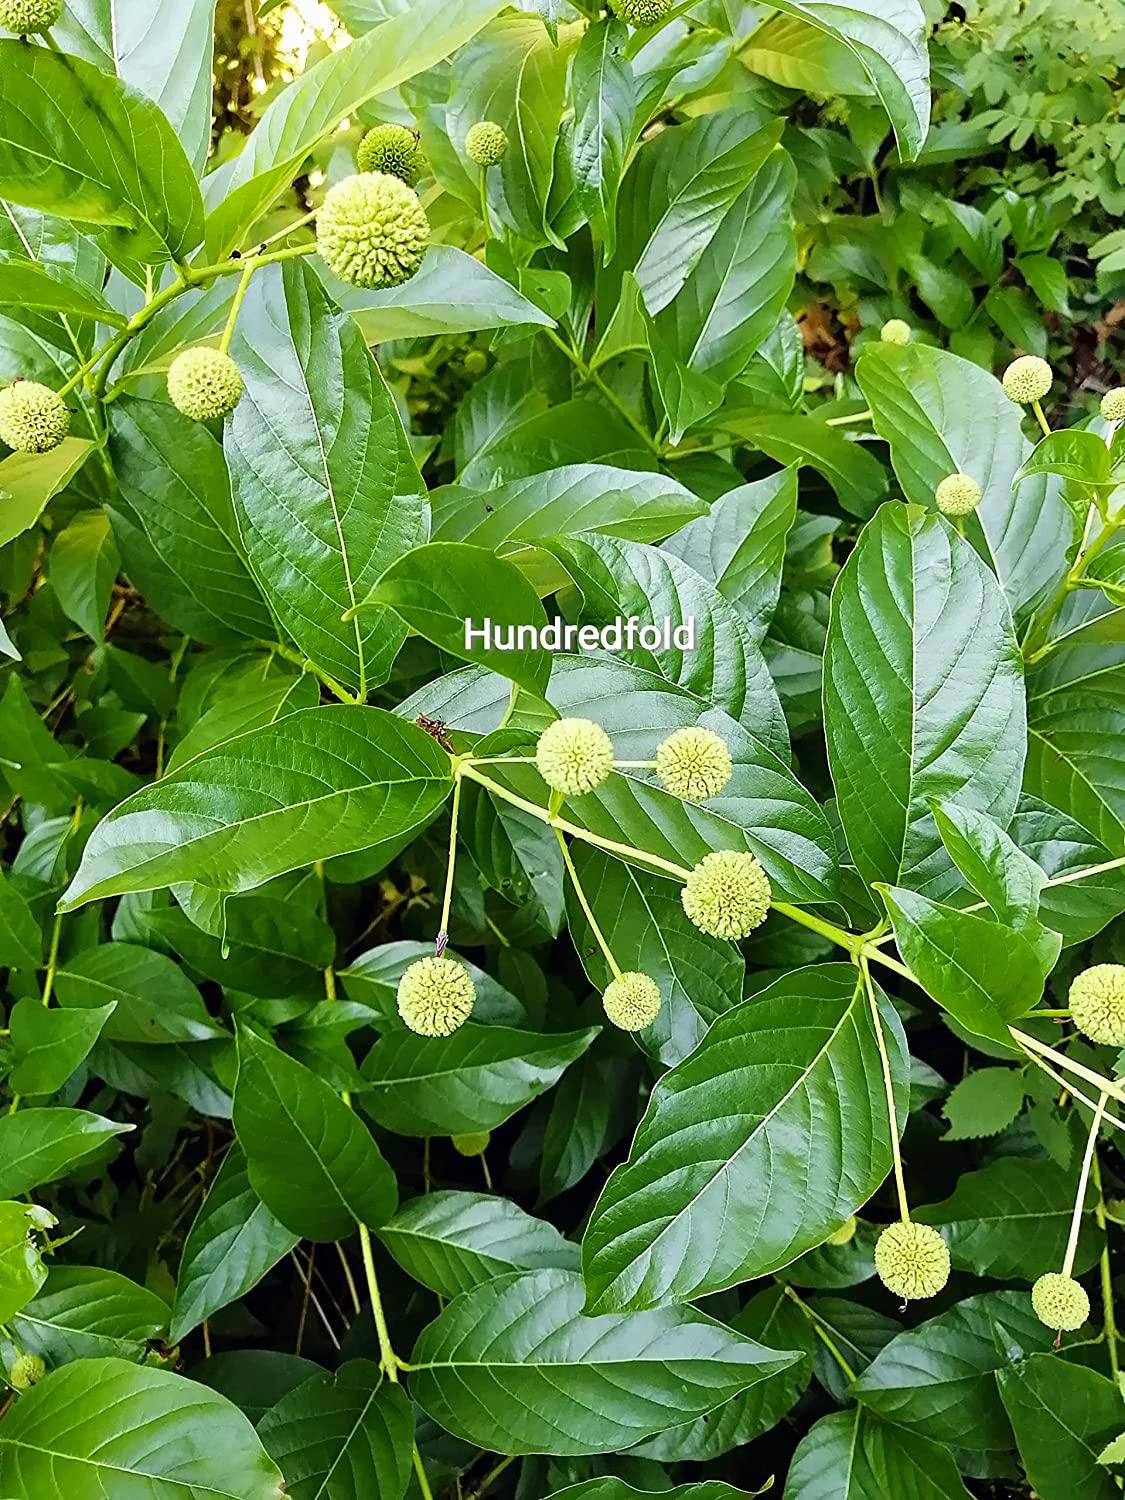 Hundredfold Button Bush Buttonbush 100 Seeds - Cephalanthus occidentalis Canada Native Bush, Spreading Shrub for Shade Garden, Rain Garden and Ponds